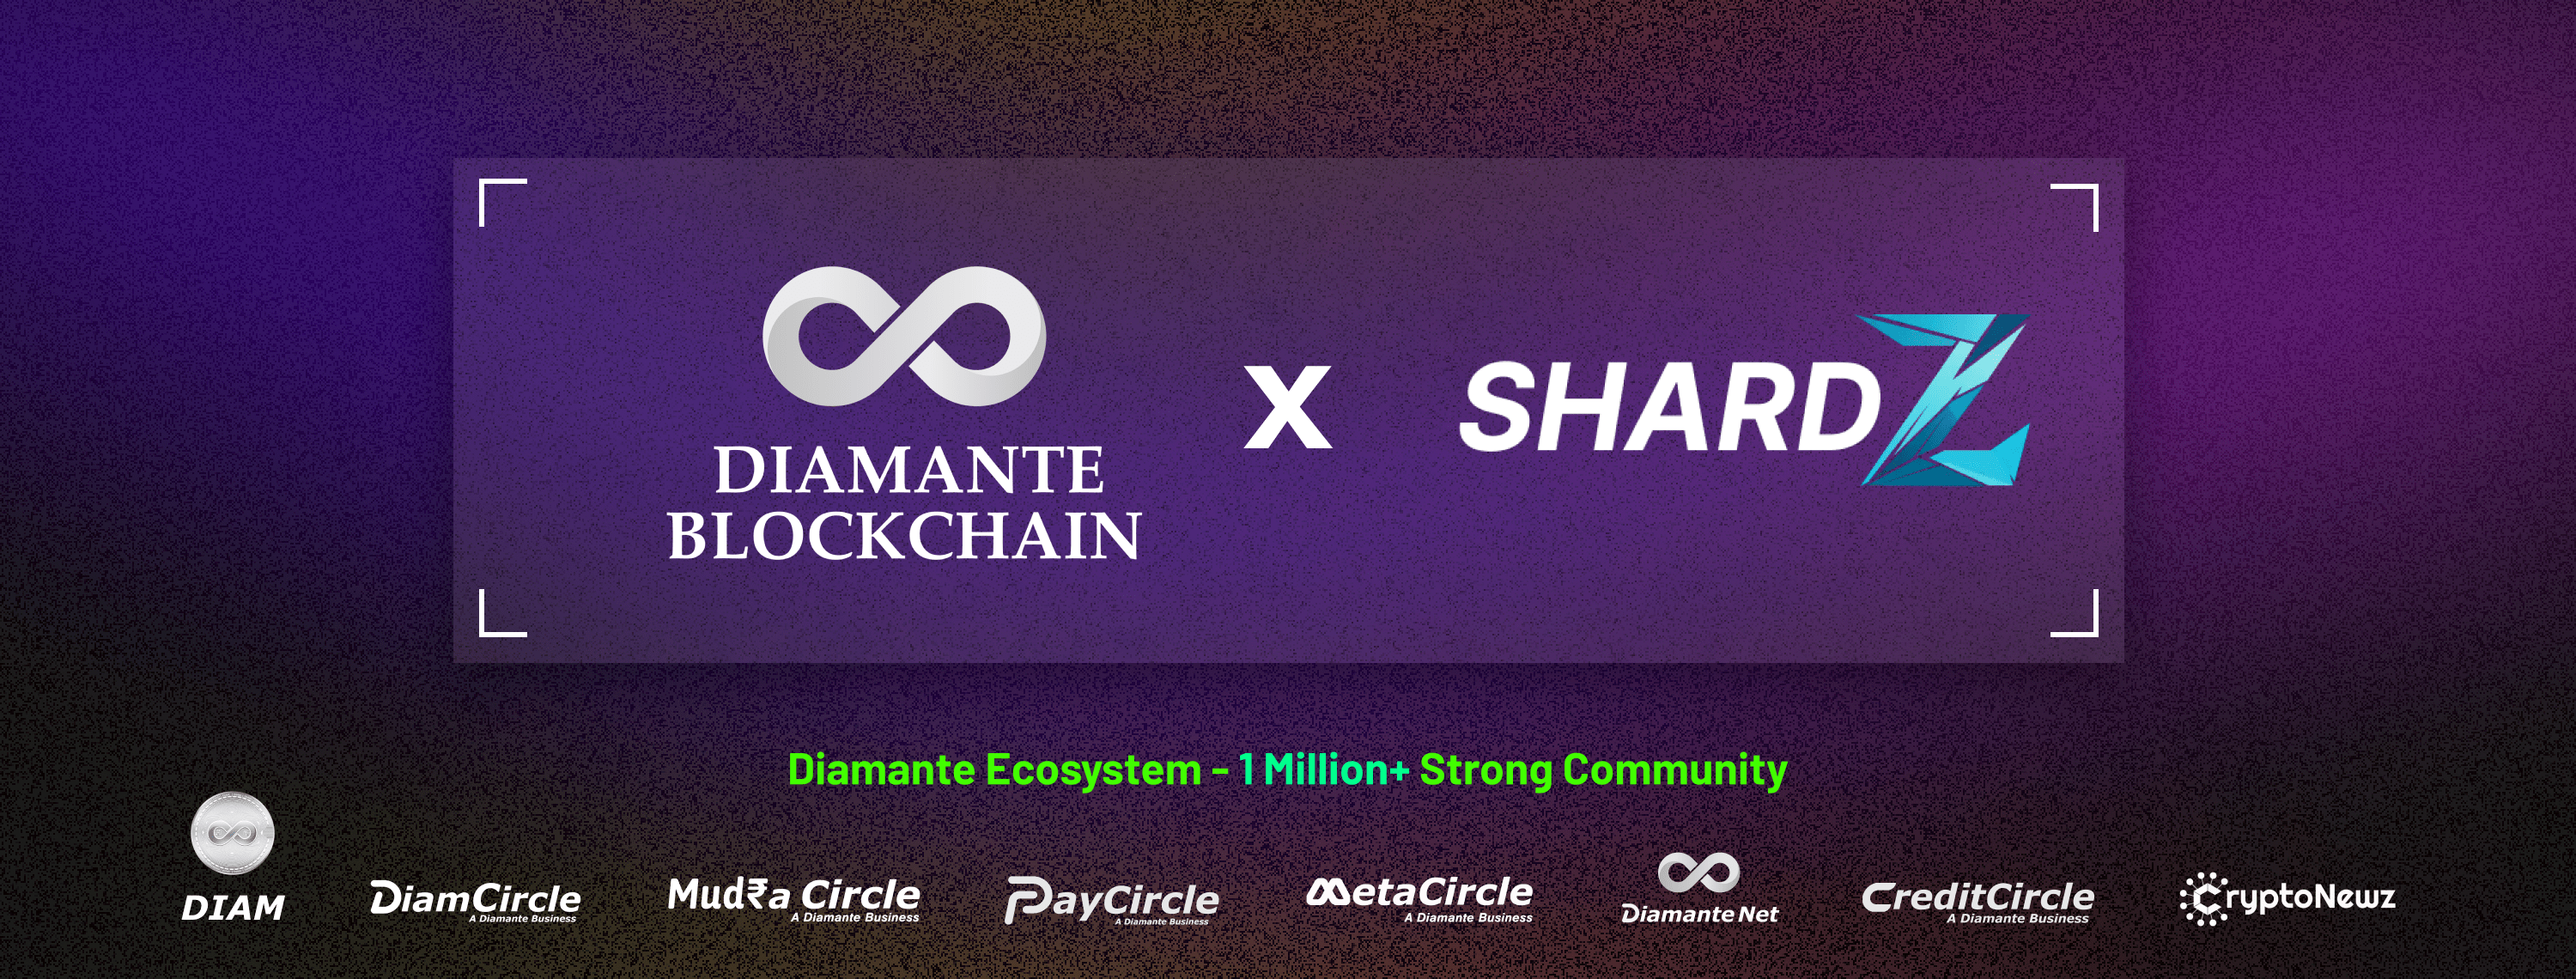 Diamante Blockchain partners with ShardZ for decentralized content creation. Image shows Diamante Blockchain and ShardZ logos with Diamante Ecosystem services like DIAM, DiamCircle, MudraCircle, PayCircle, MetaCircle, DiamanteNet, CreditCircle, and CryptoNewz.